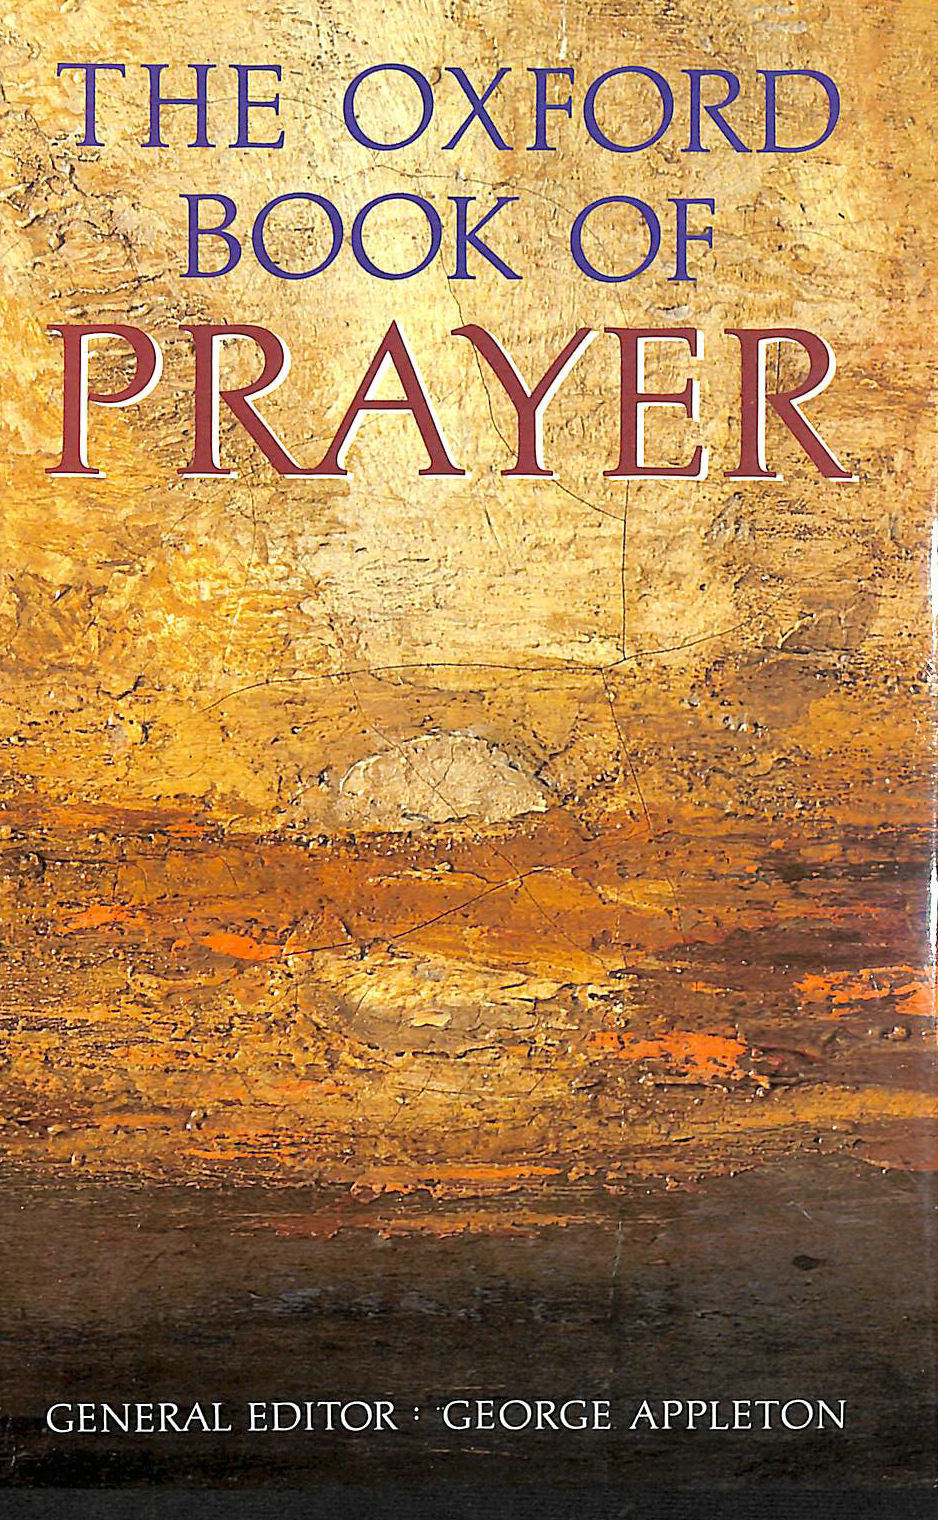 APPLETON, GEORGE [EDITOR] - The Oxford Book of Prayer